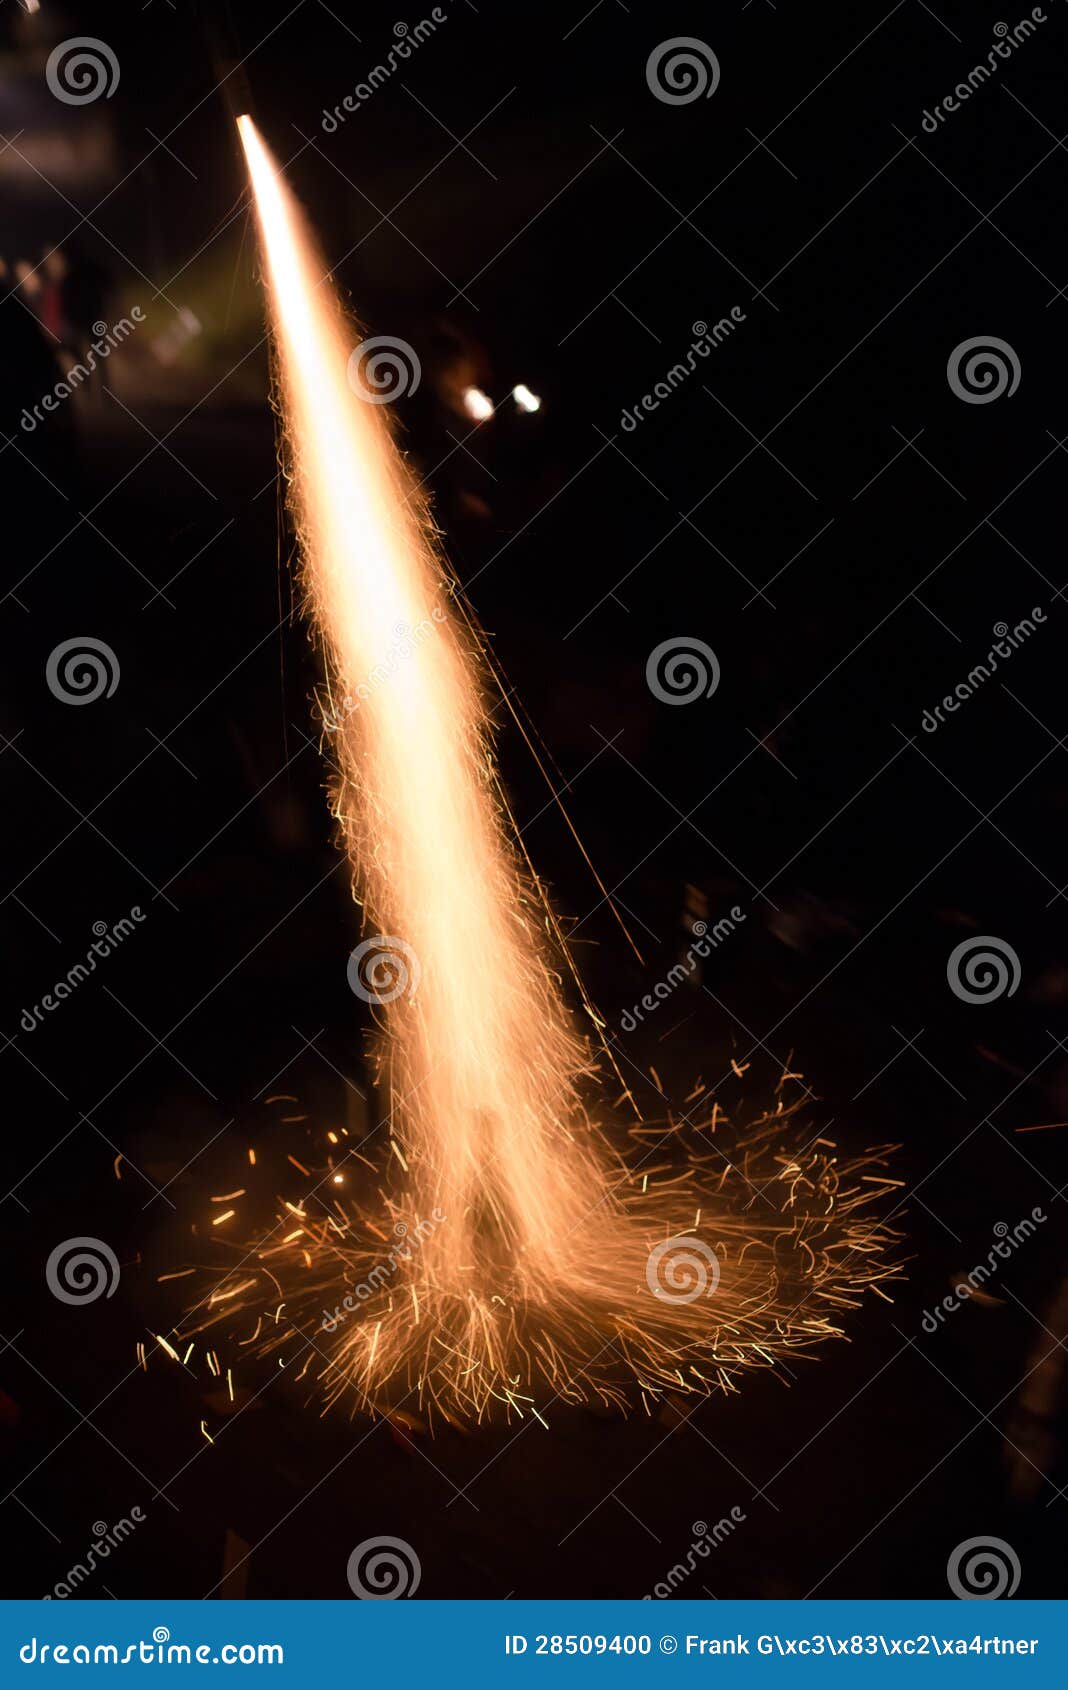 Fireworks Rocket Launch Stock Photo - Image: 28509400